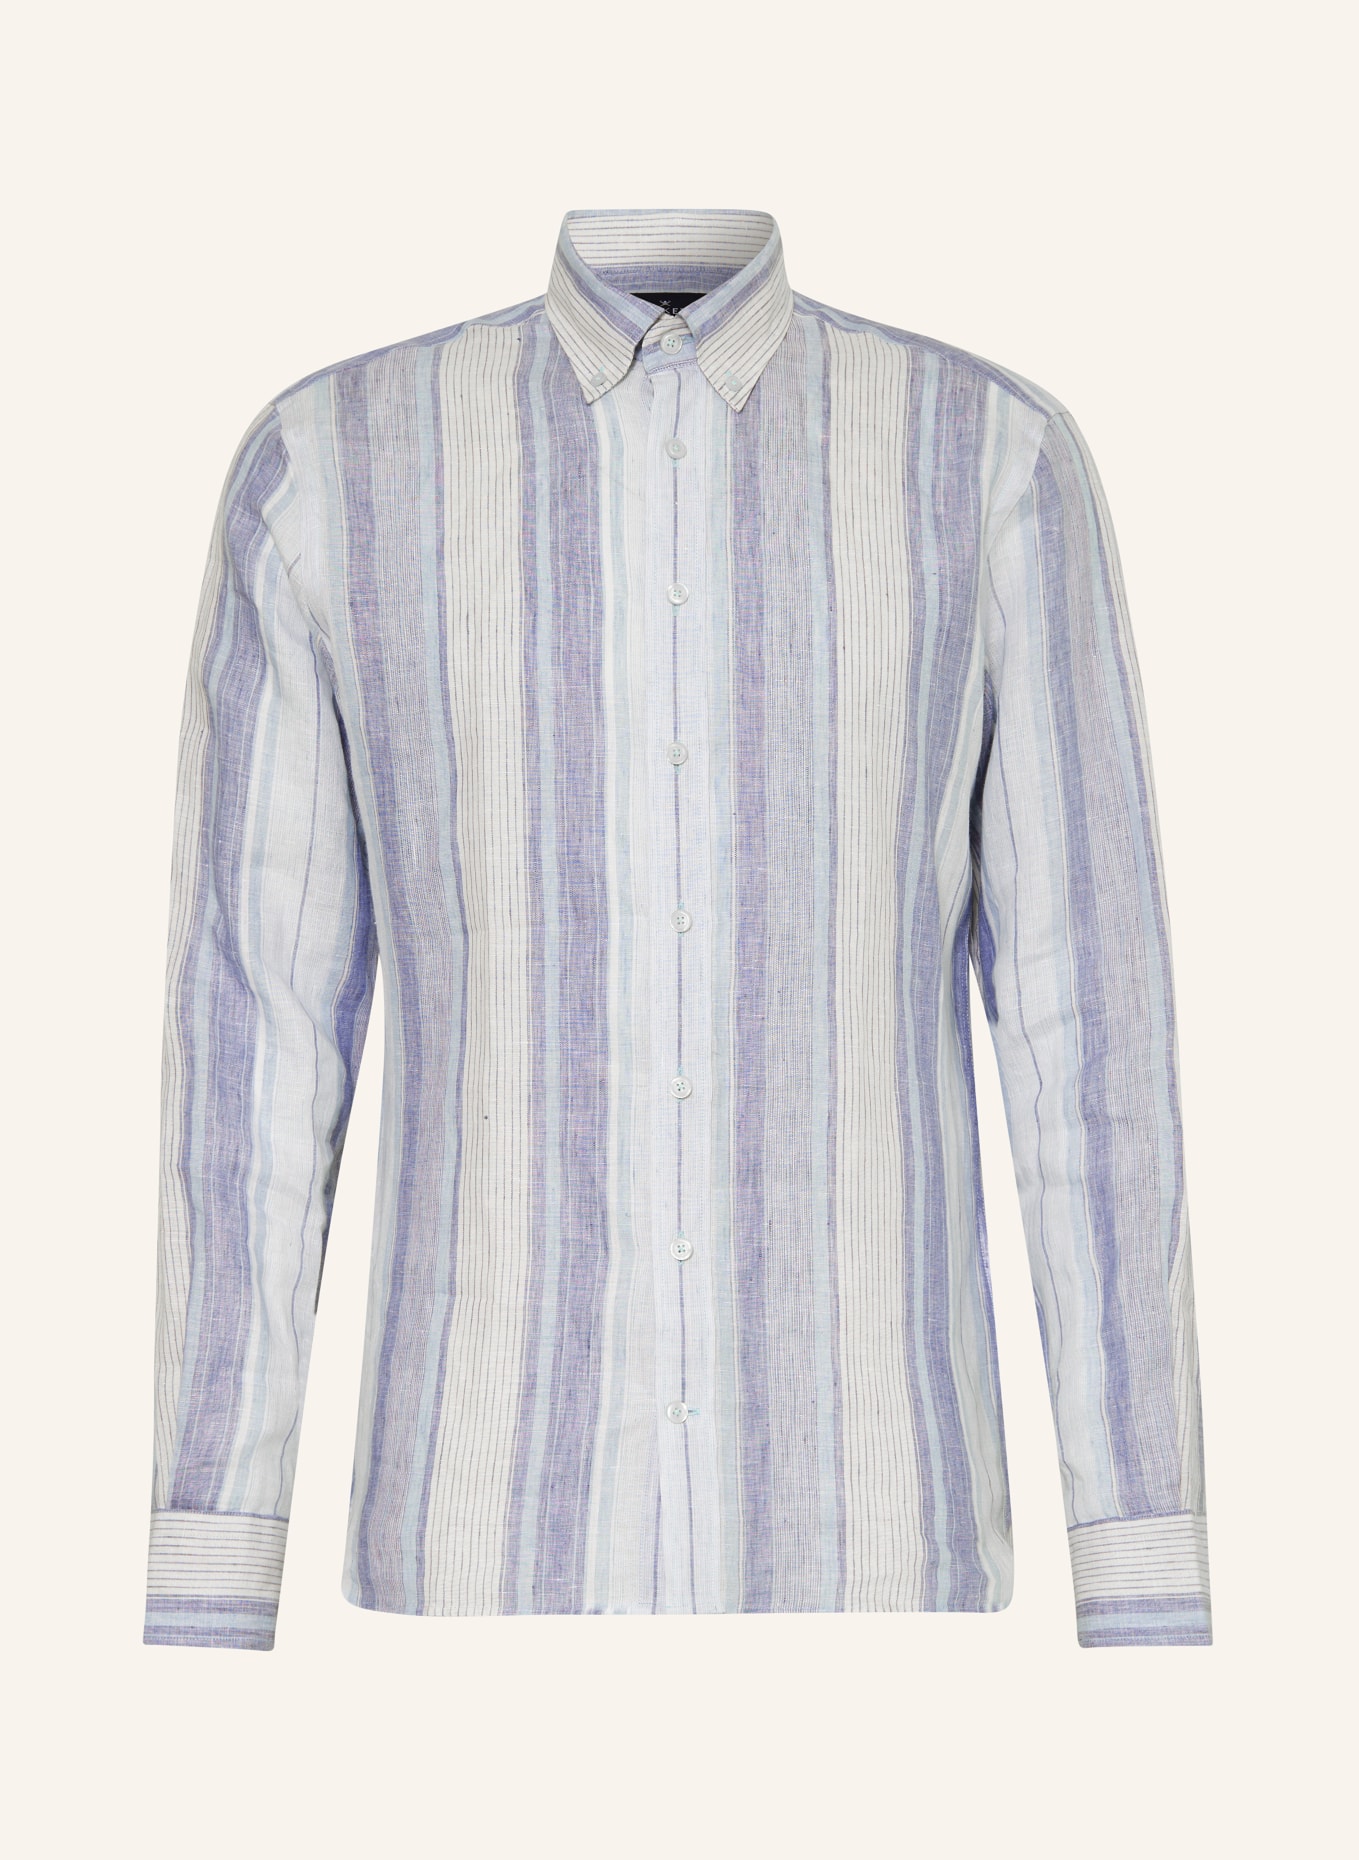 HACKETT LONDON Leinenhemd Slim Fit, Farbe: BLAU/ BLAUGRAU/ WEISS (Bild 1)